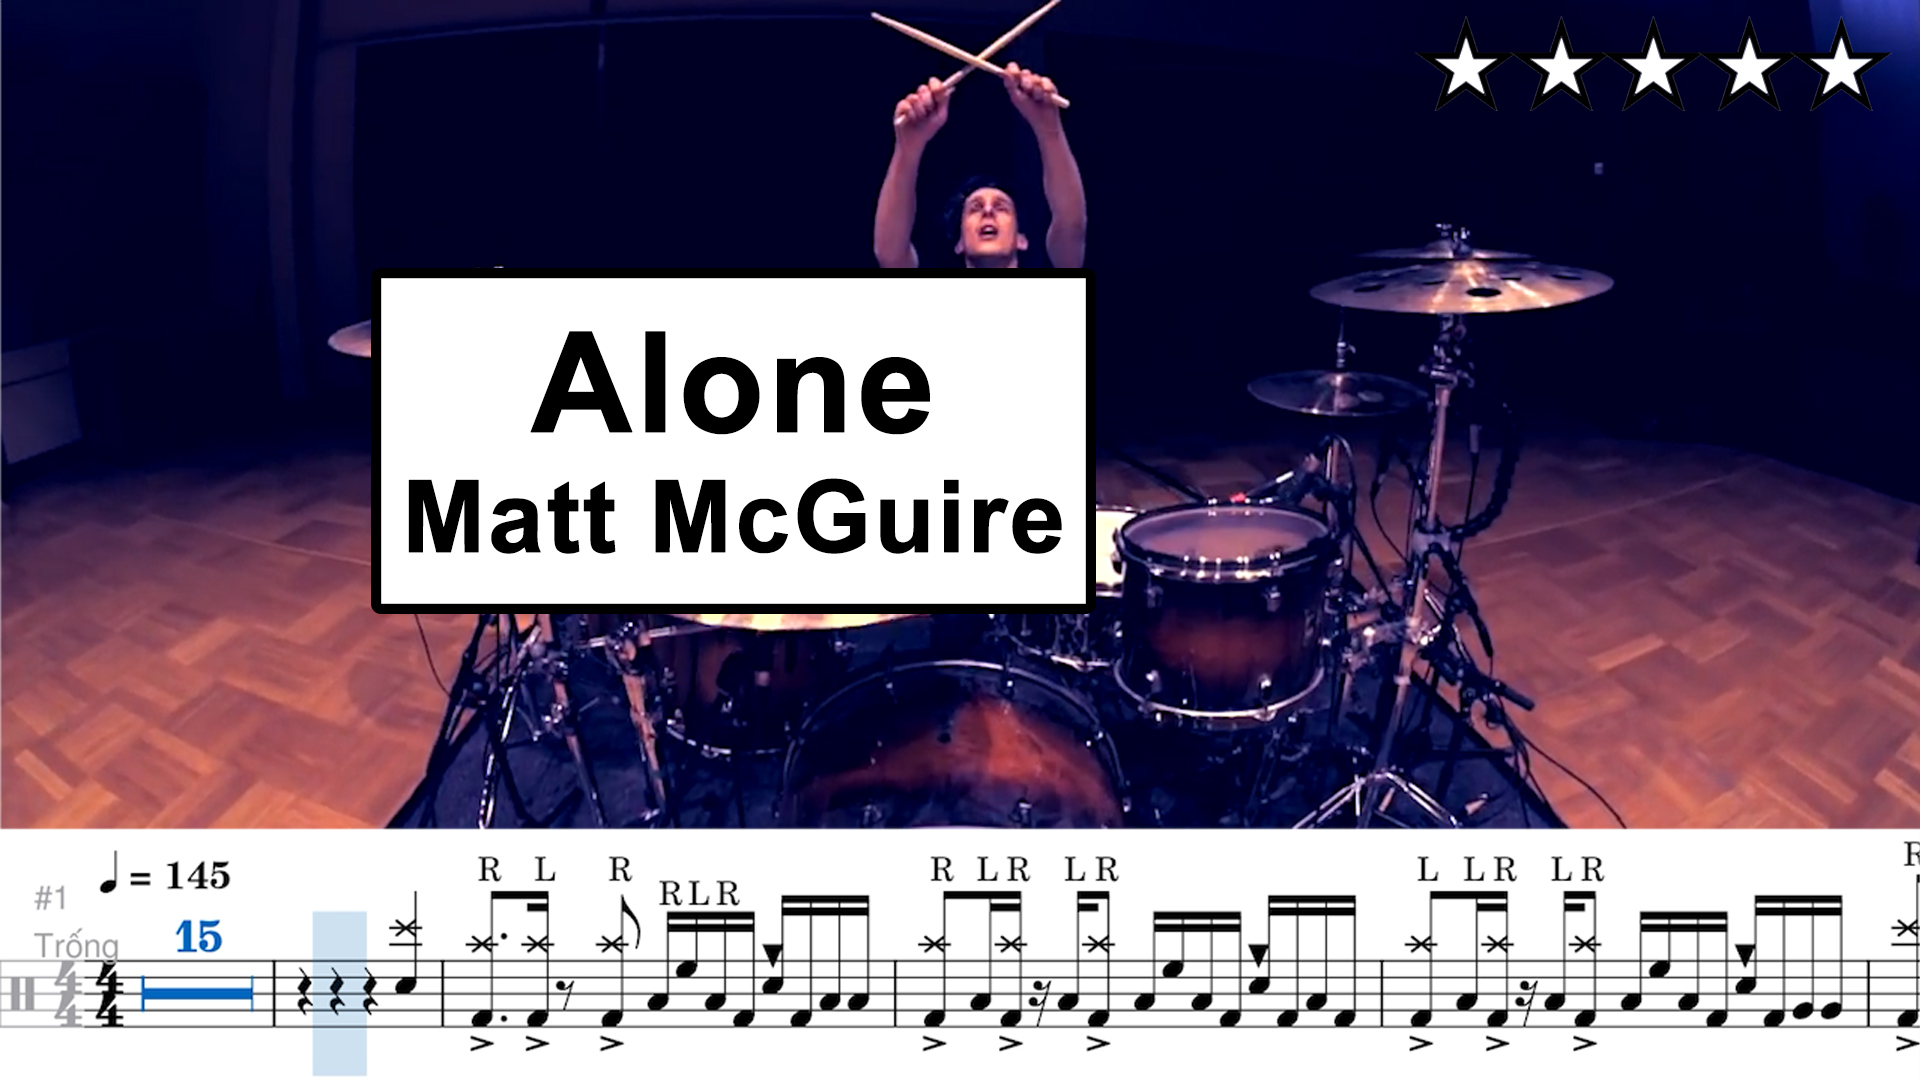 Matt McGuire - Alone - Marshmello (★★★★★) DRUM SHEET - Drum tutorial